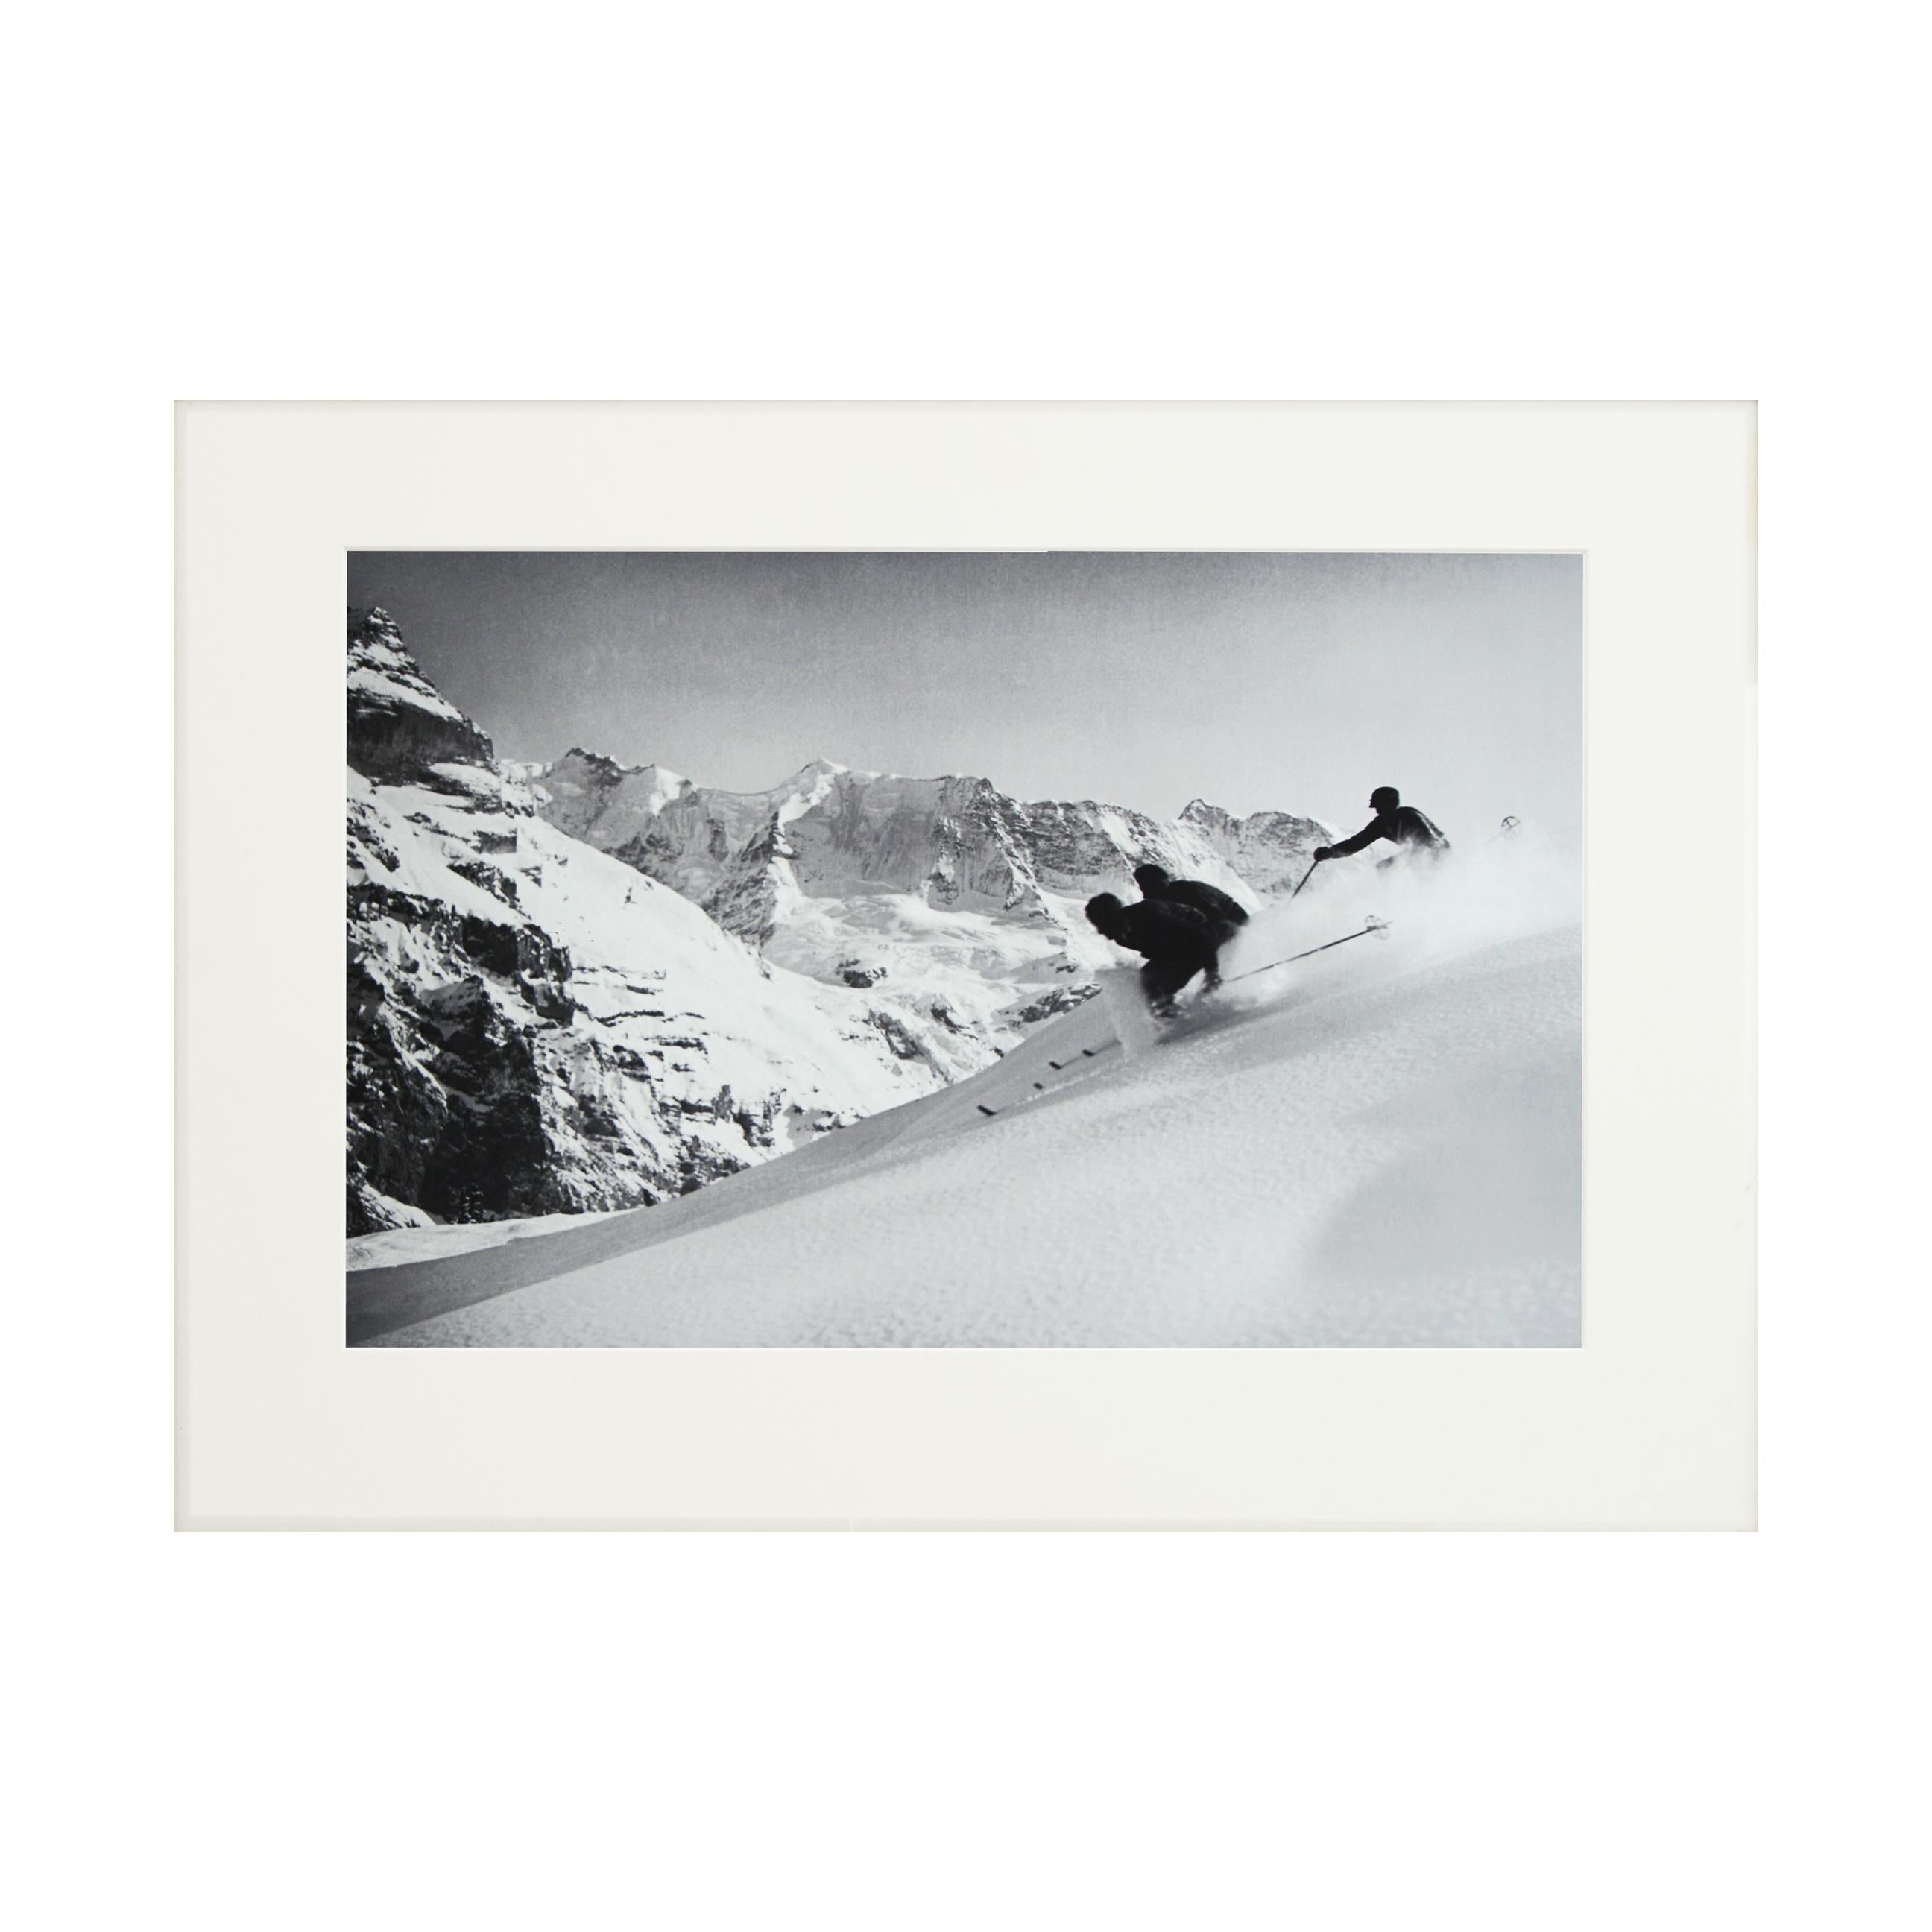 Paper Vintage Style Ski Photography, Framed Alpine Ski Photograph, 'SCHUSS' Murren For Sale